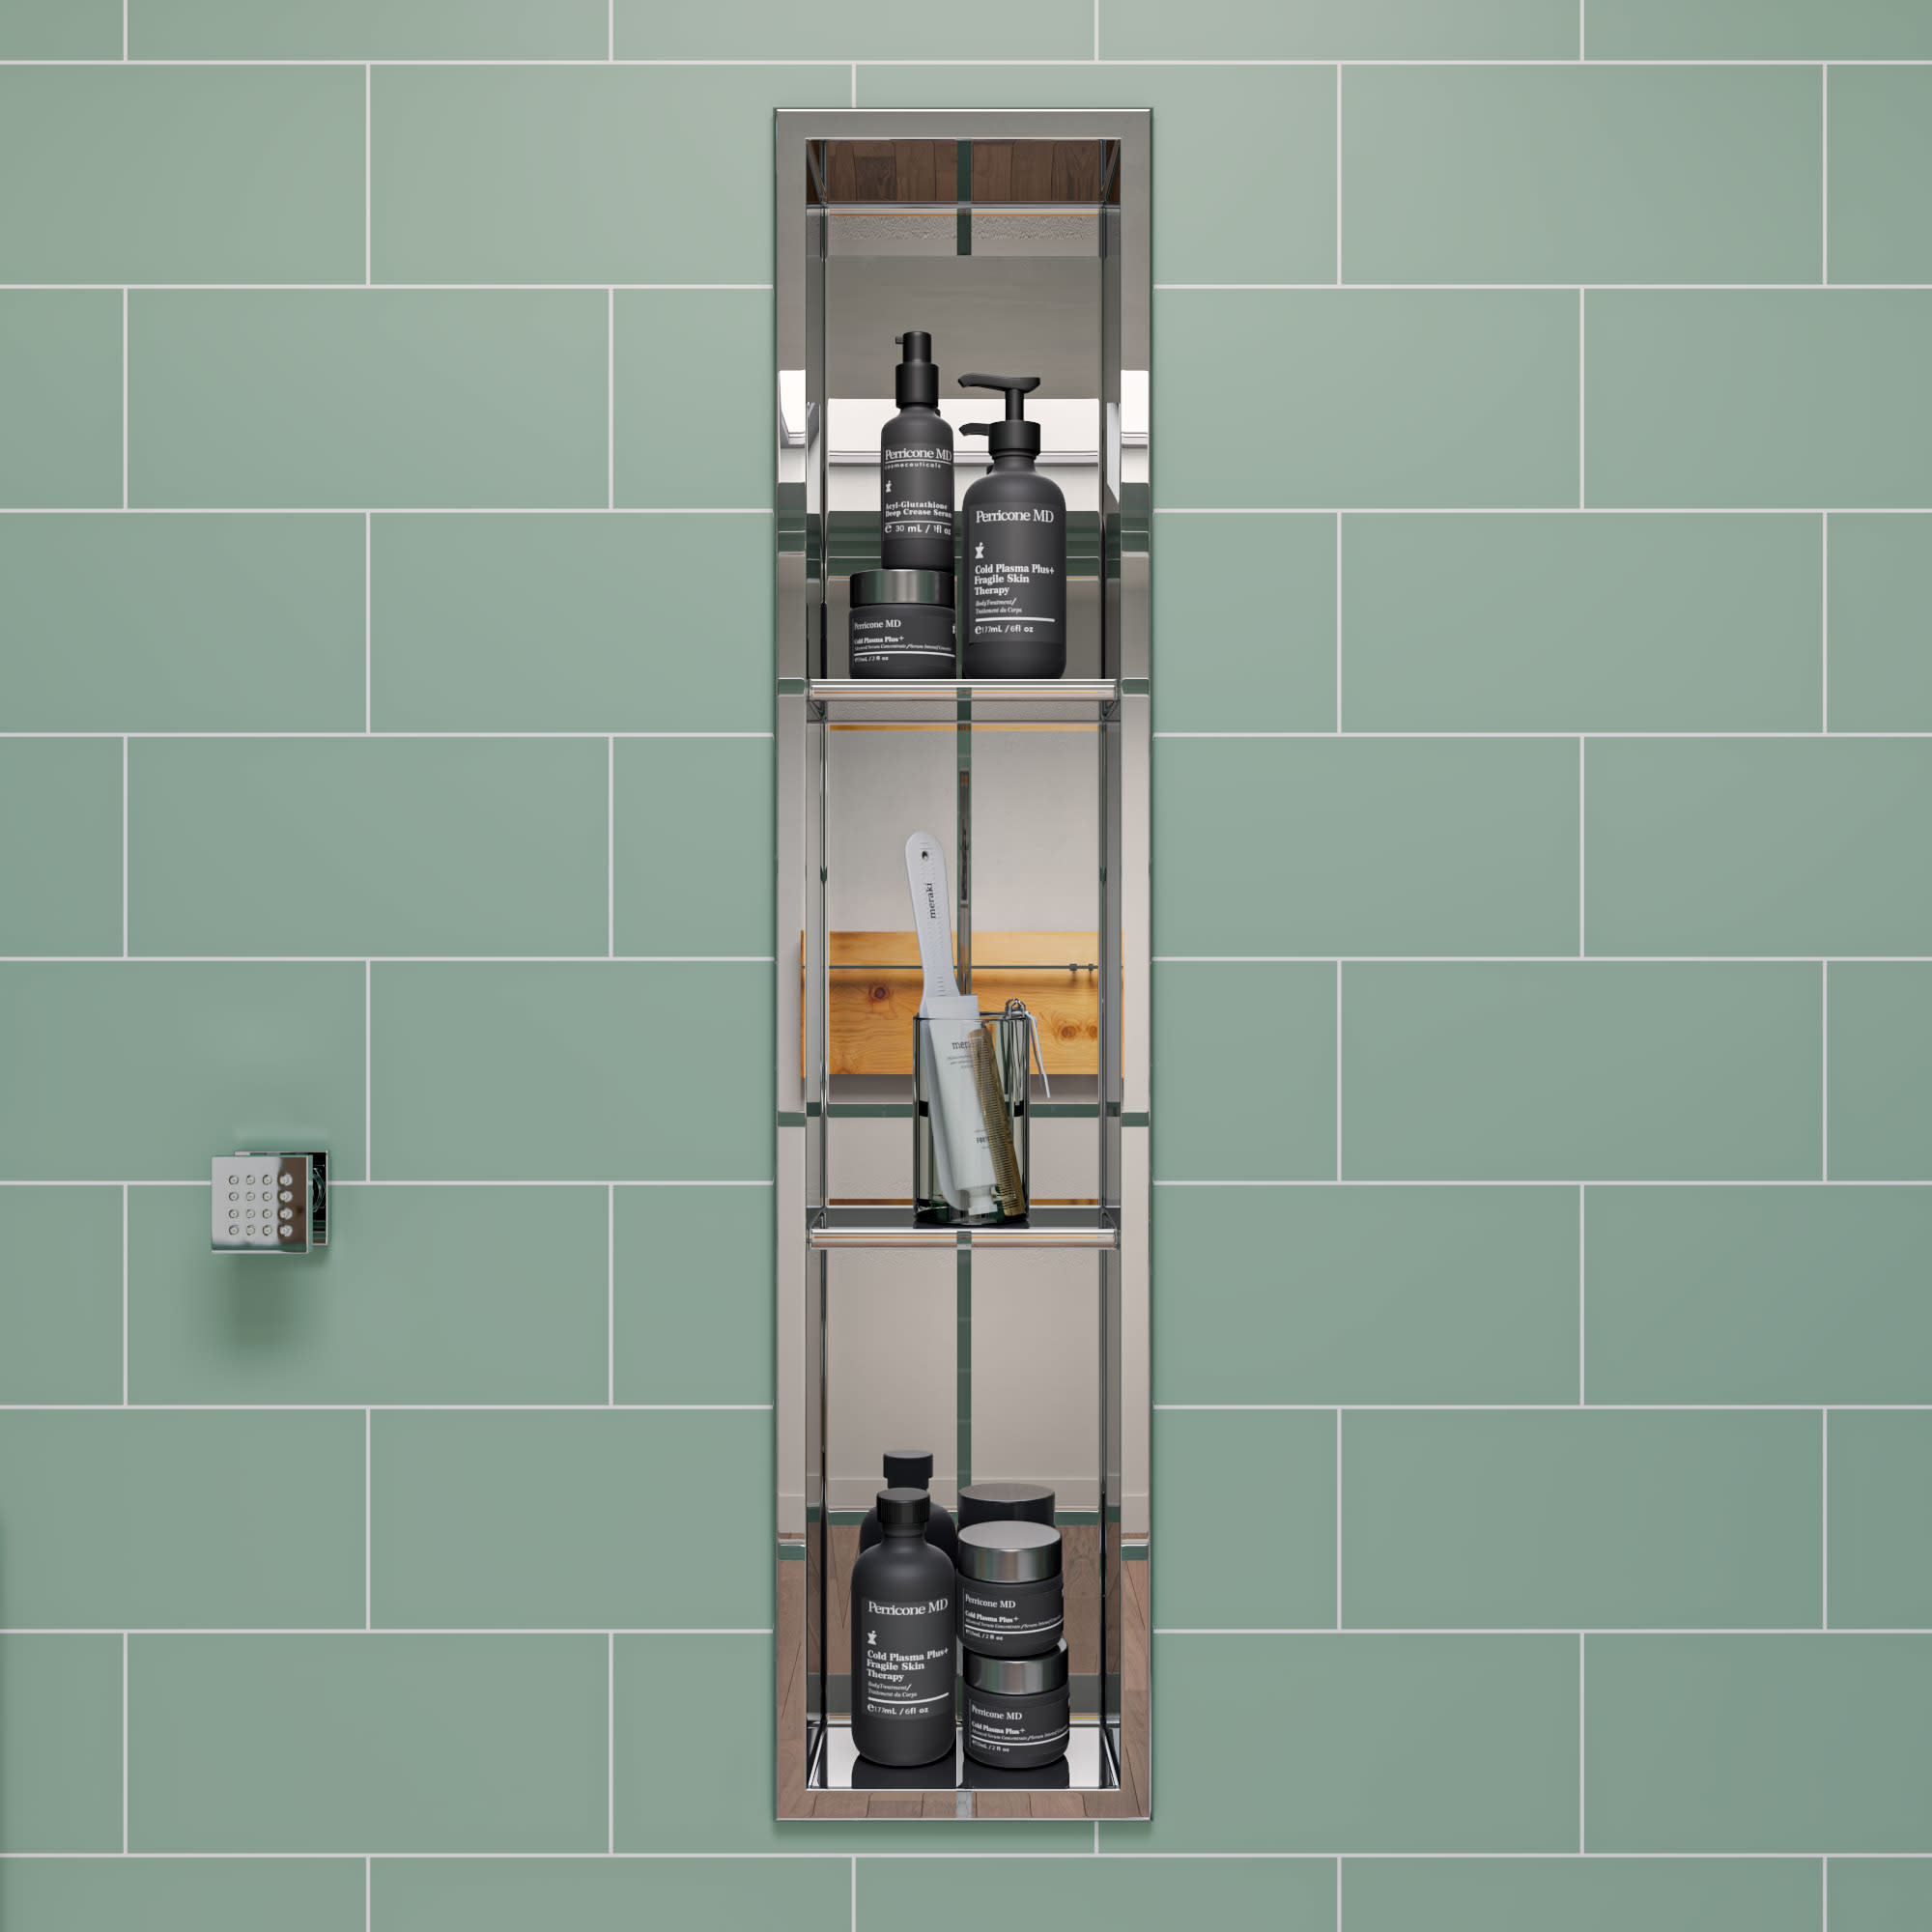 ALFI brand ABN1616 16 x 16 Square Single Shelf Bath Shower Niche